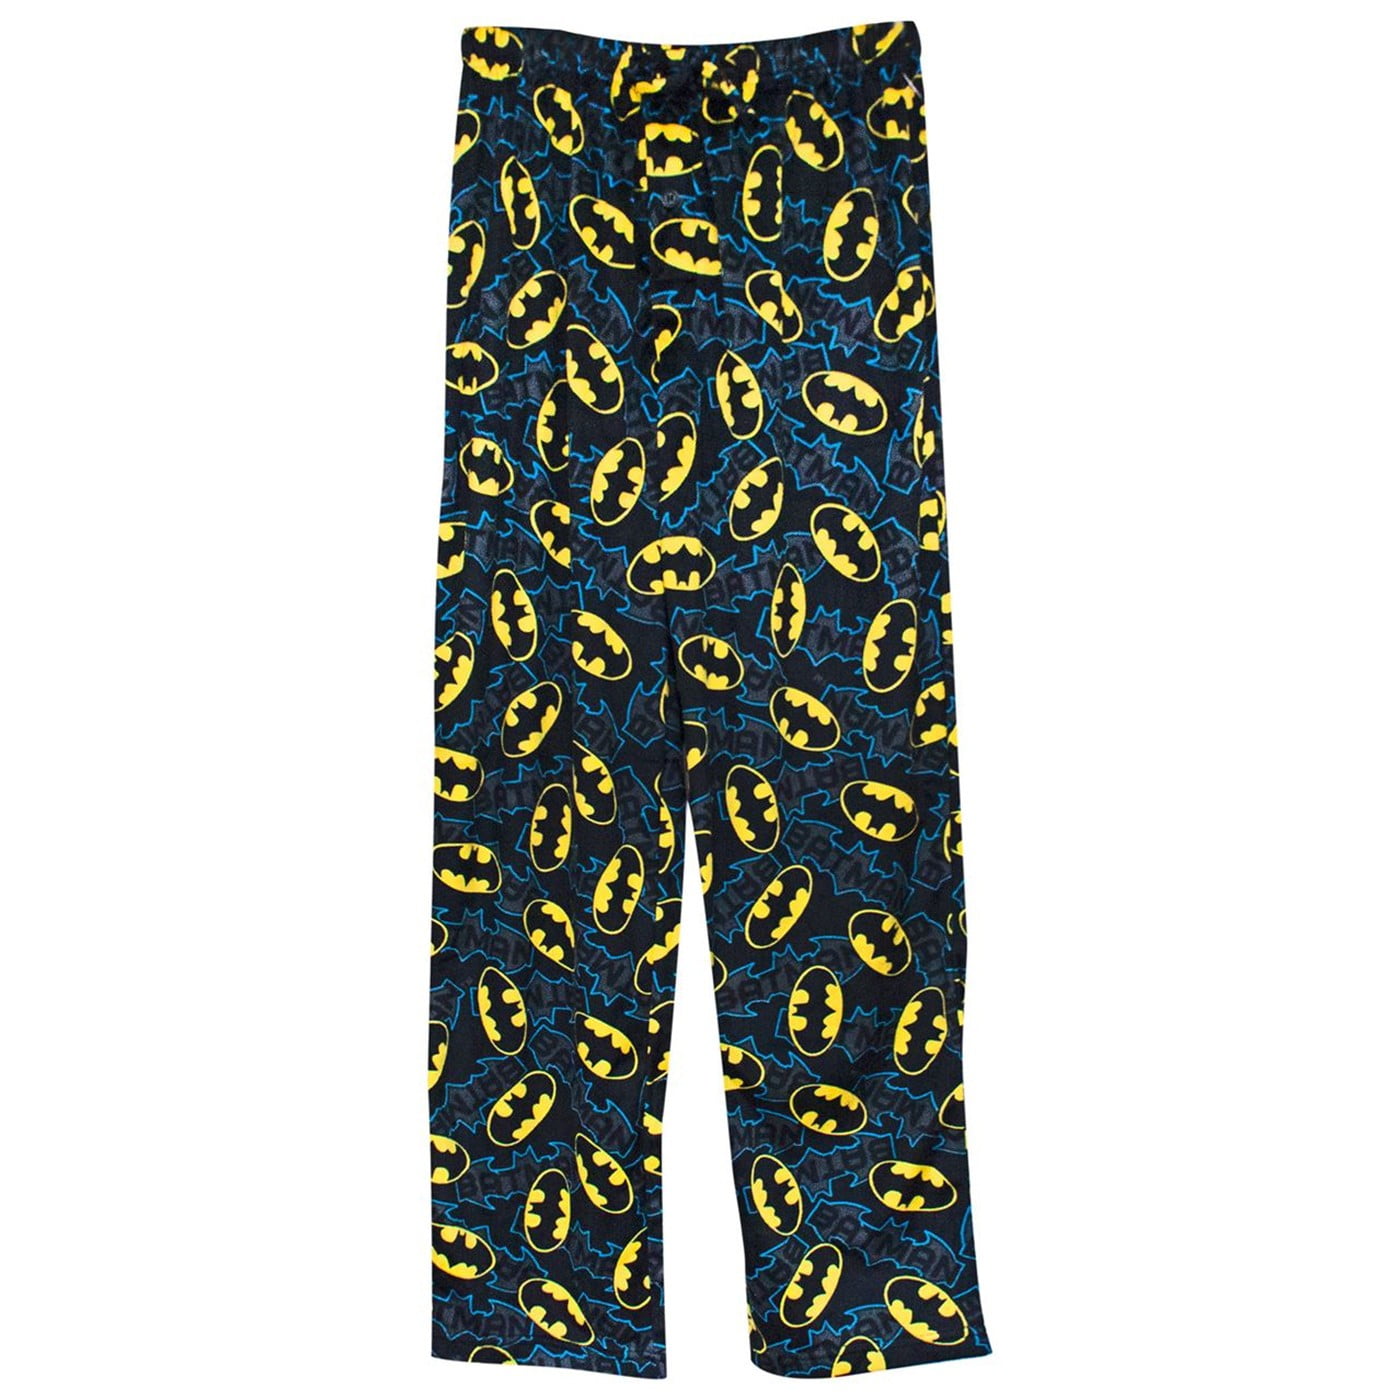 Small // 6-7, Yellow//Black Batman Classic Boys Fleece Pajama Sleep Pants